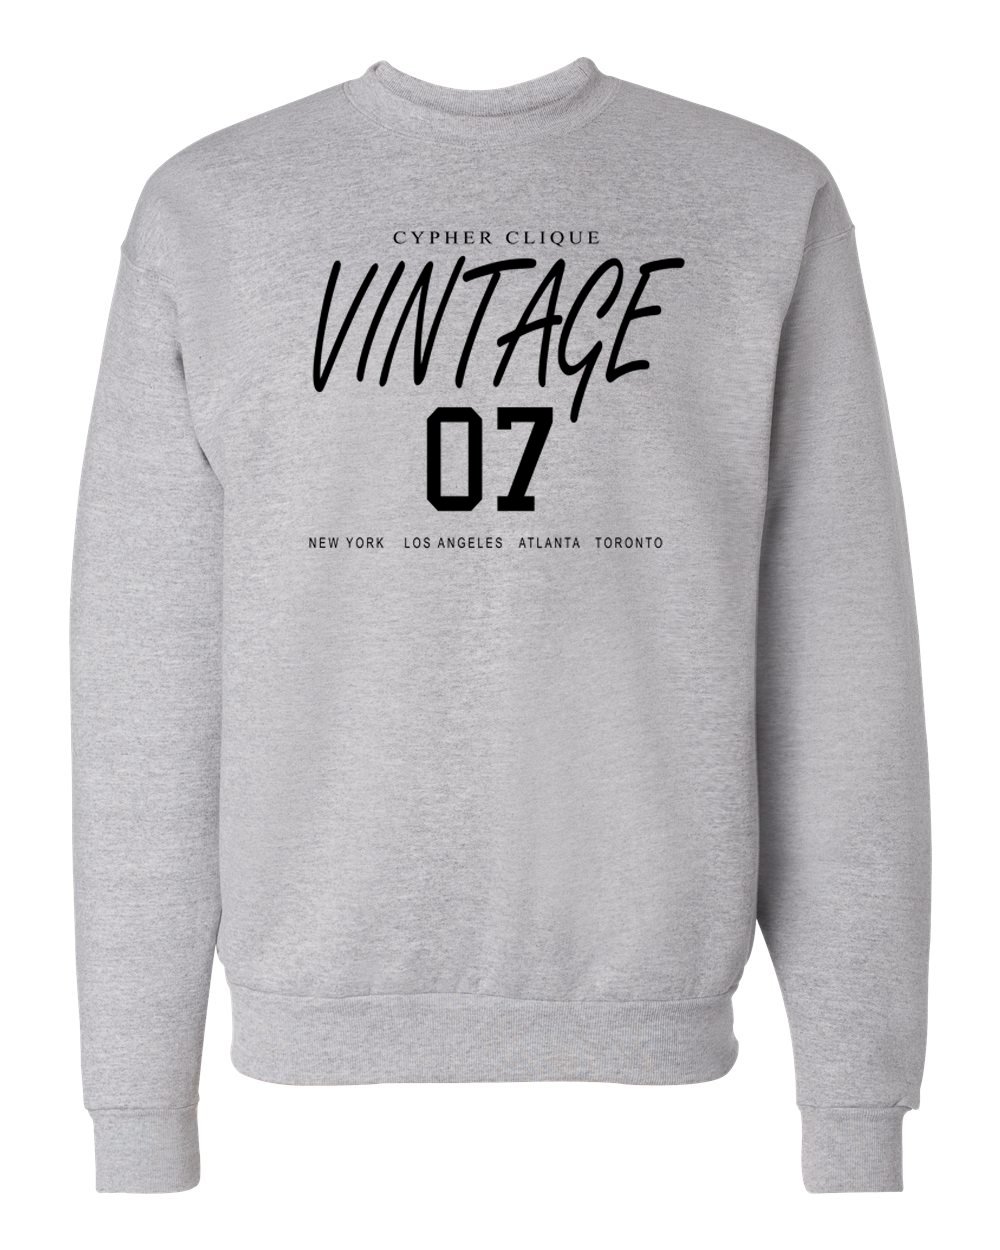 Image of Cypher Clique "Vintage 07" Sweatshirt (Black Text)